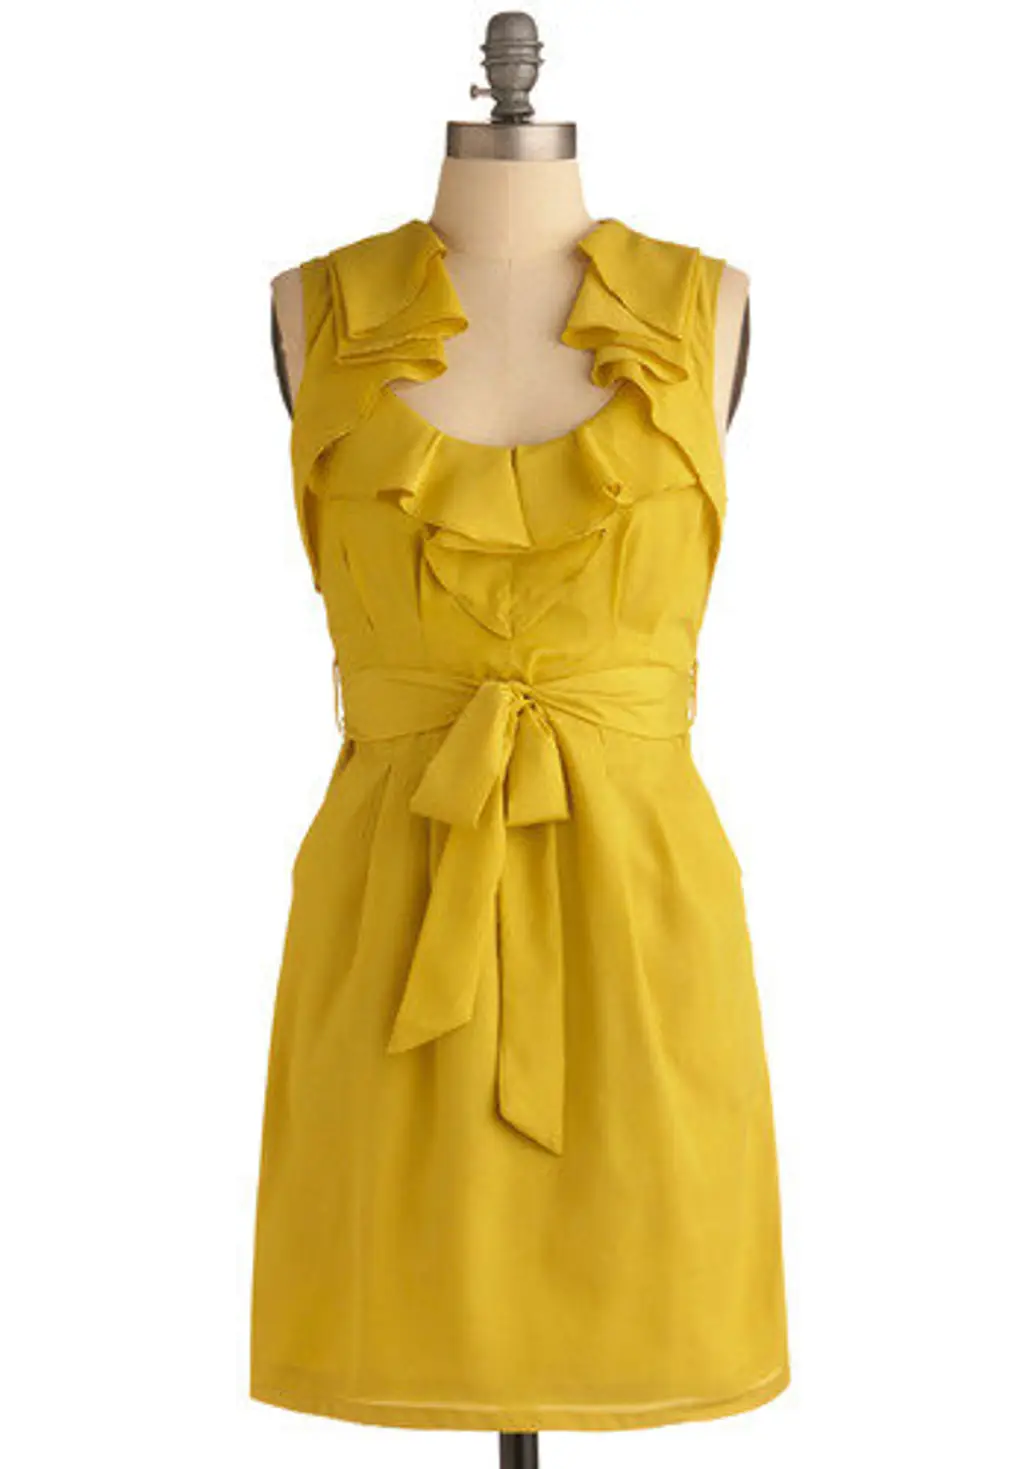 Lemon Sour Dress